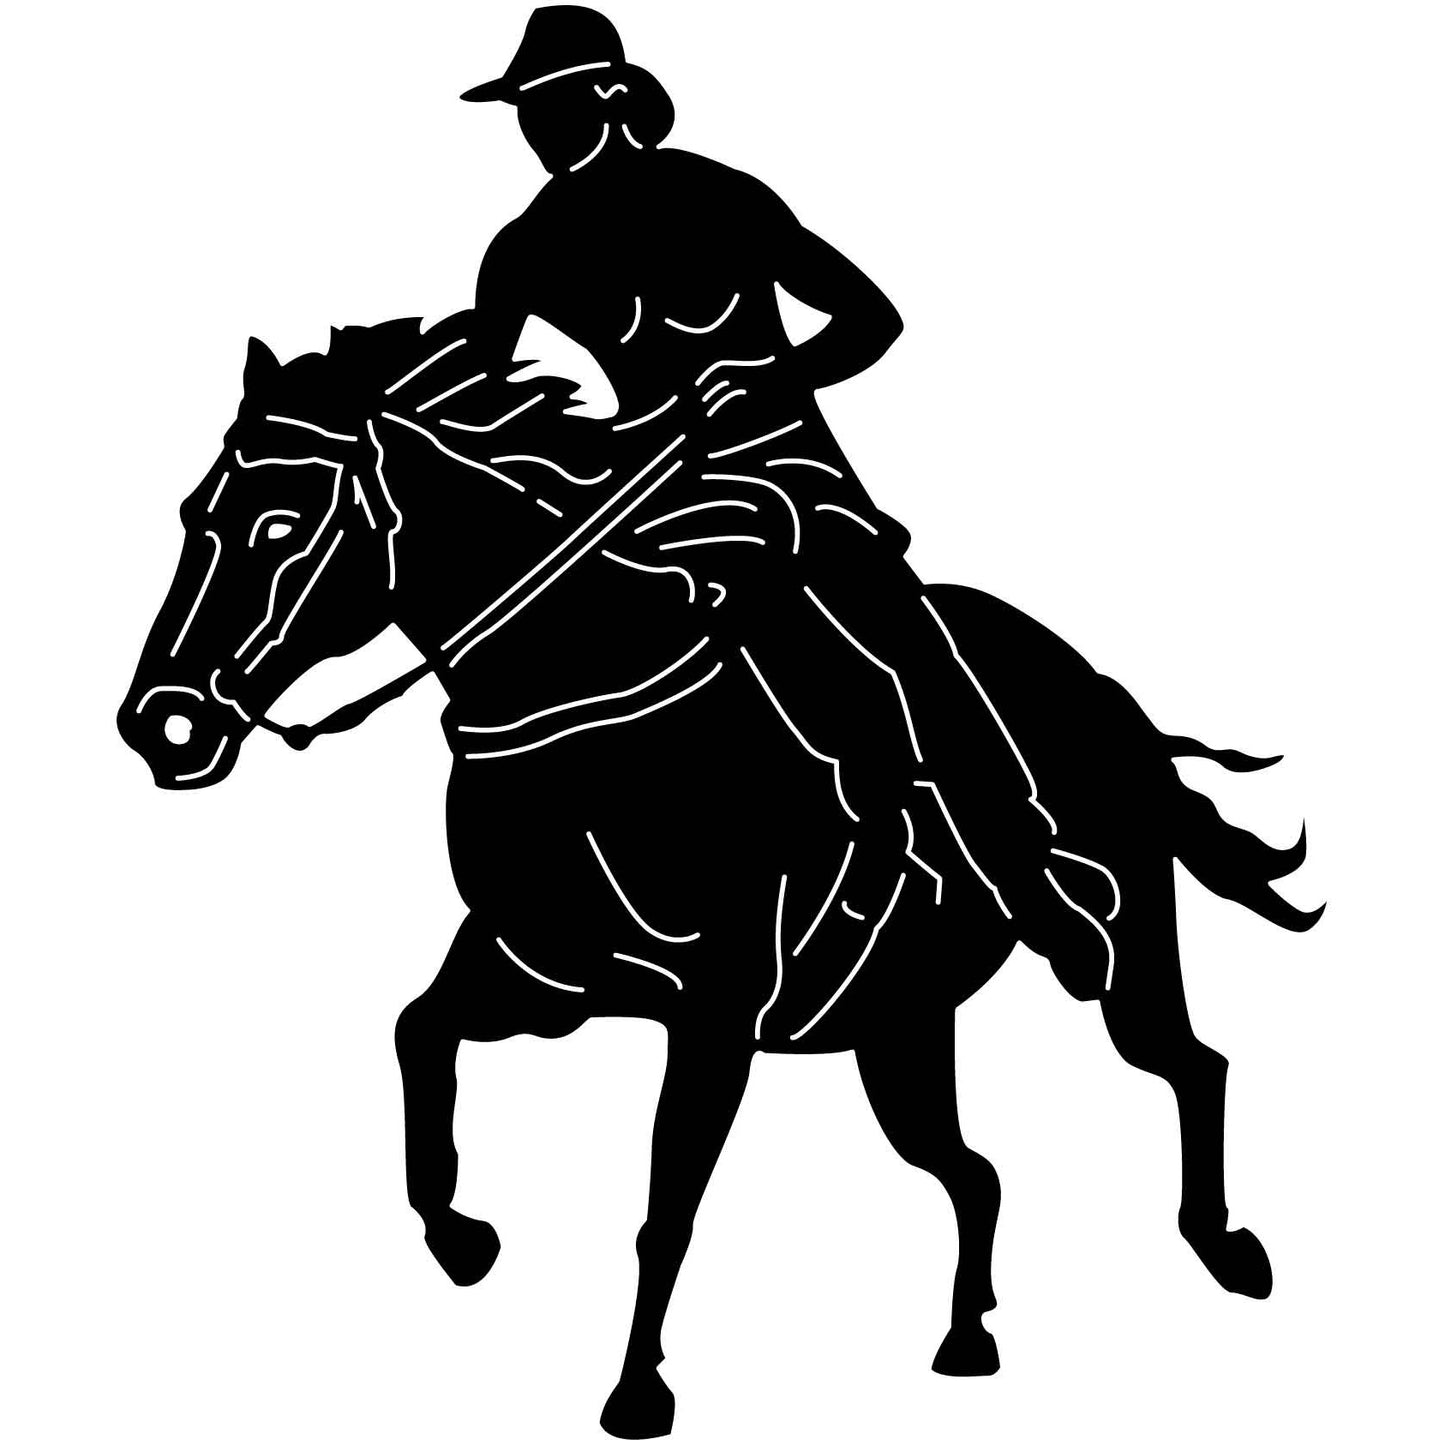 Horses and Cowboys 17